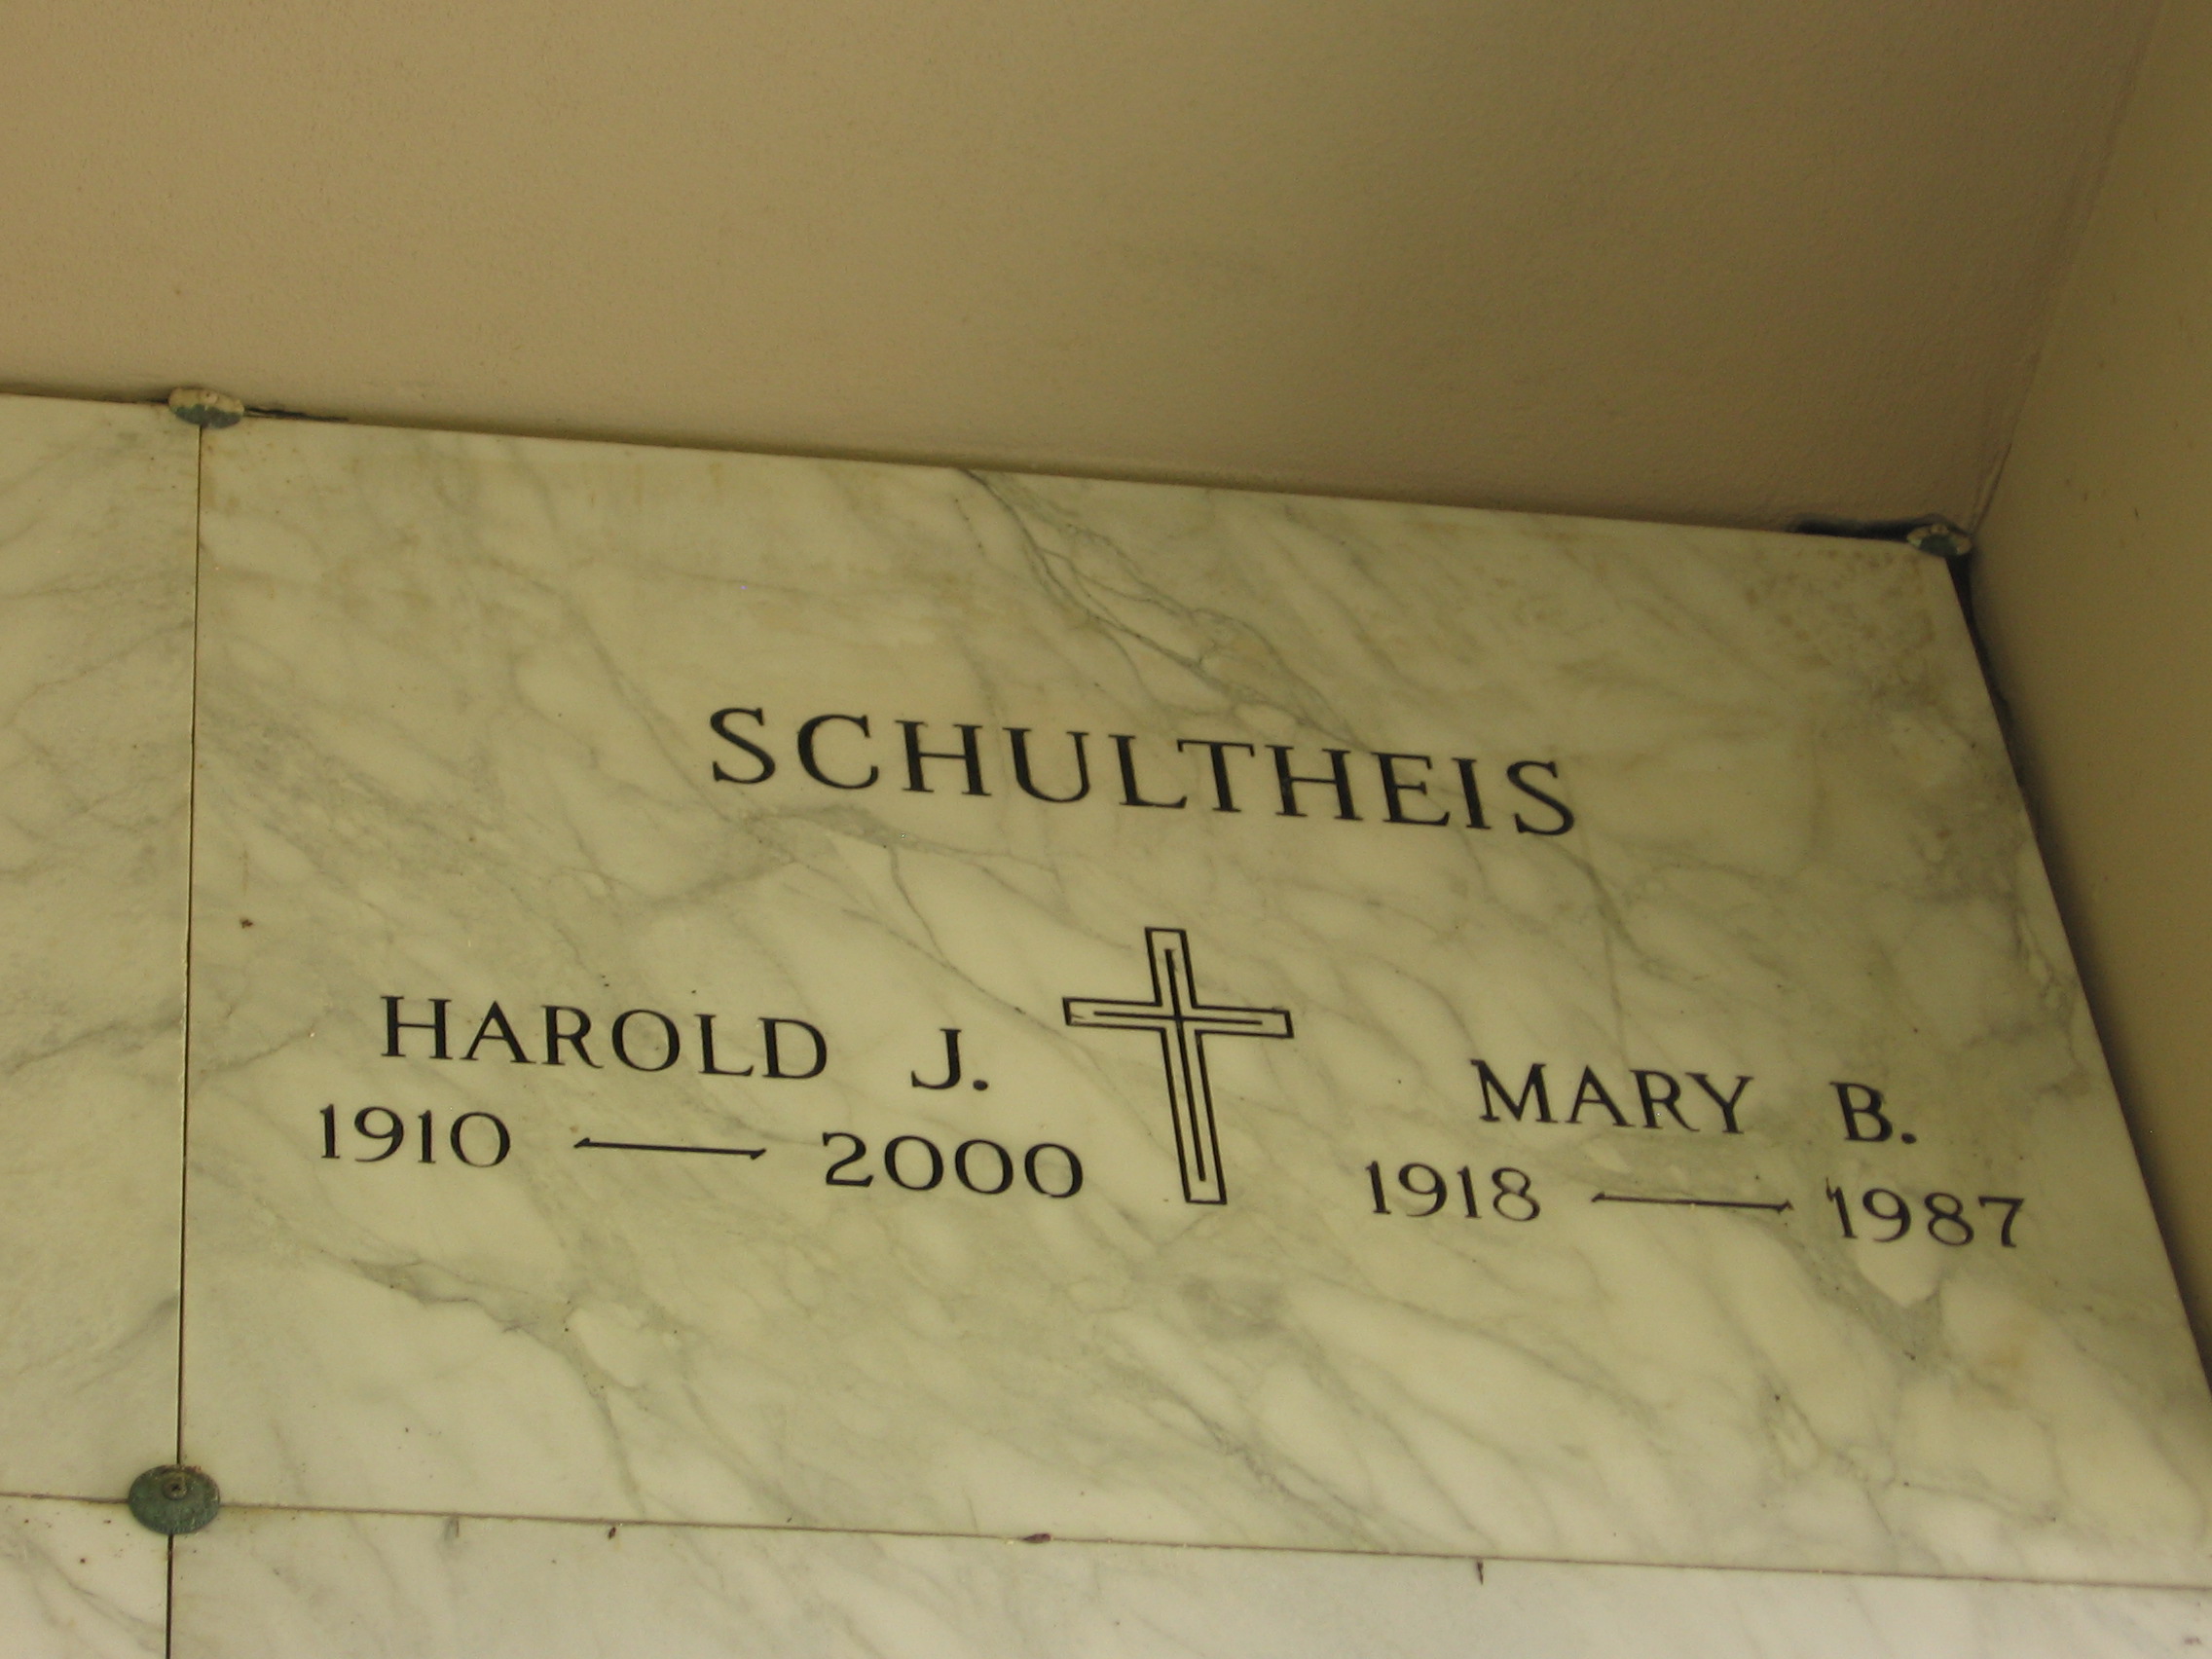 Harold J Schultheis